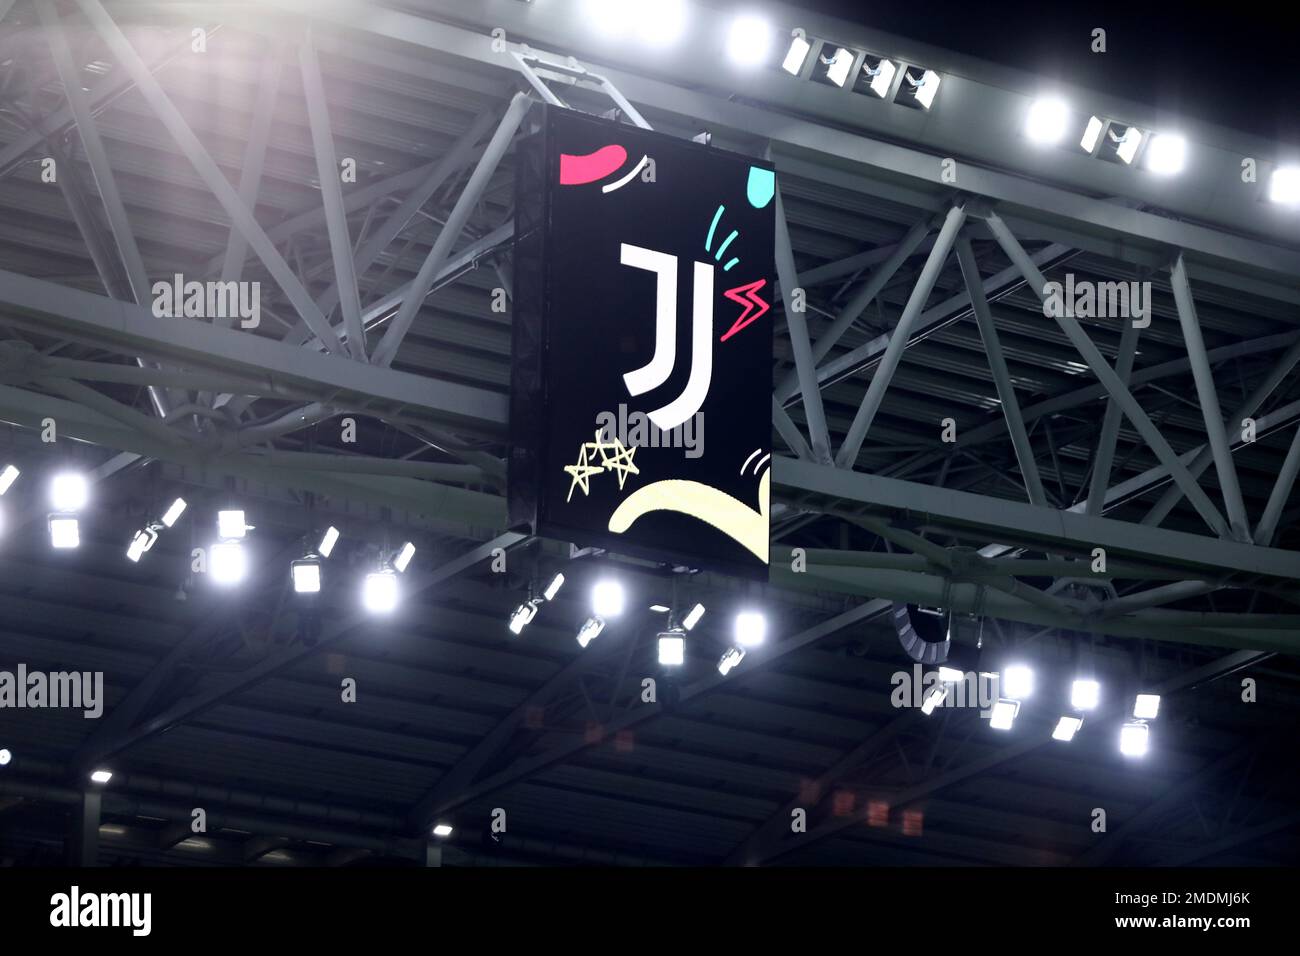 Juventus logo hi-res stock photography and images - Alamy